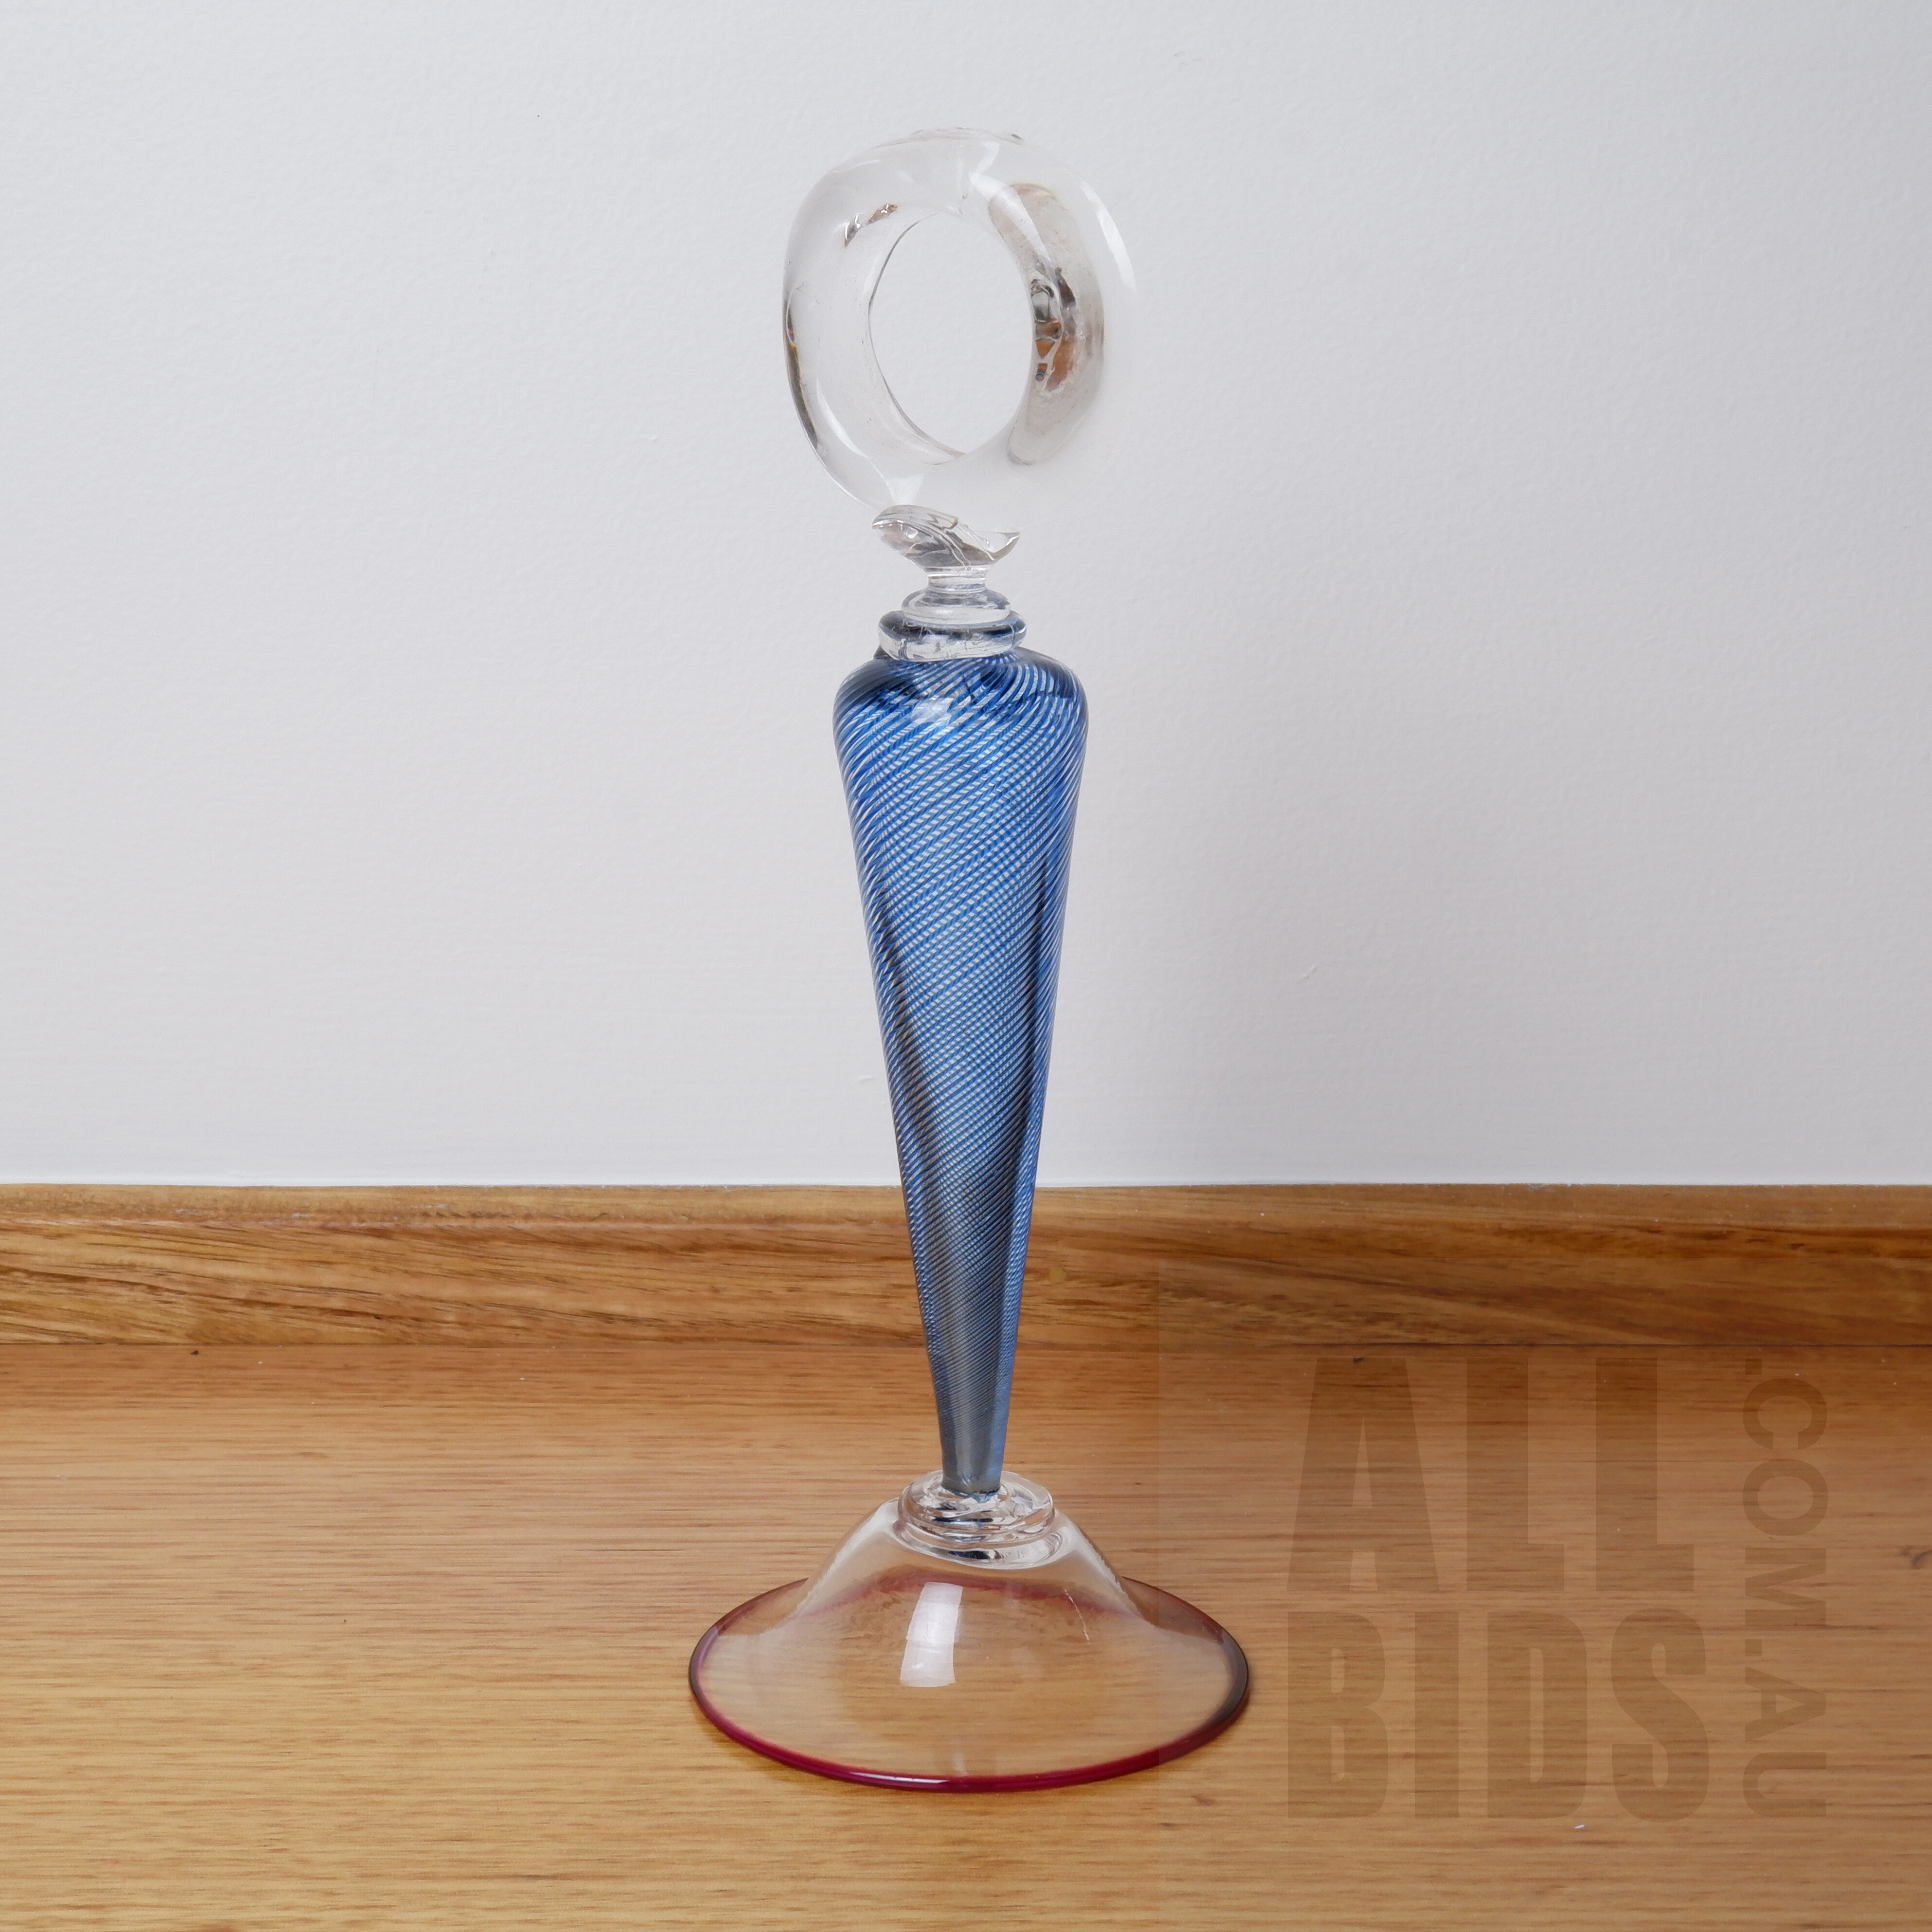 'Good Quality Australian Studio Glass Ornament'